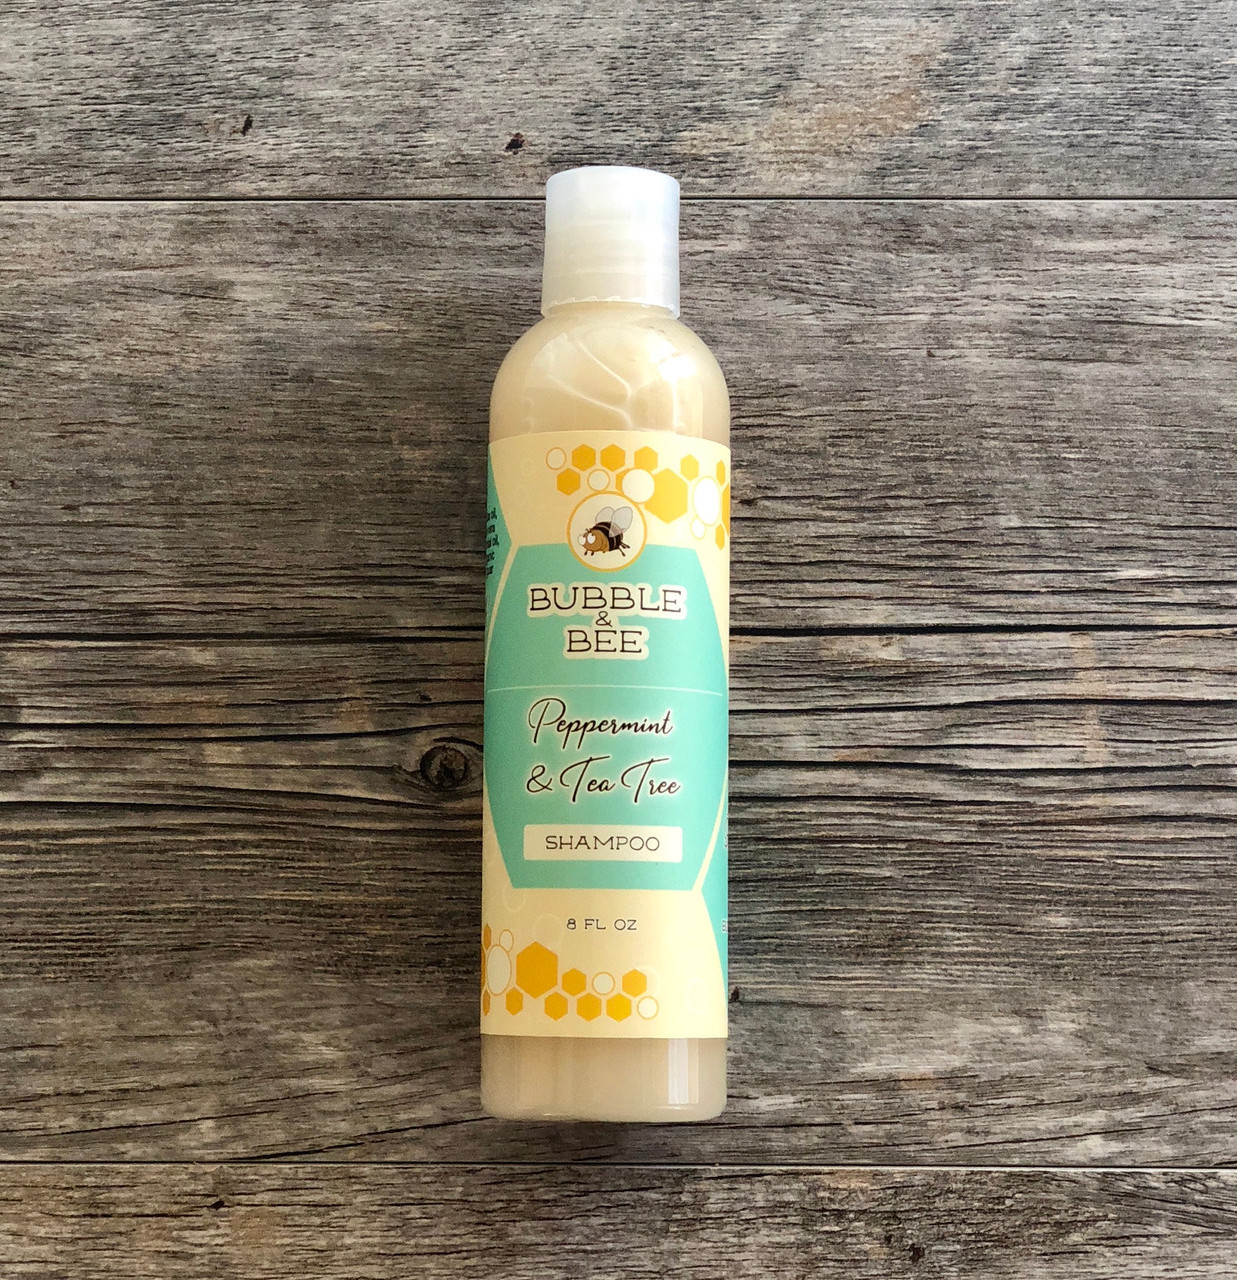 Bubble & Bee Organic Dandruff Shampoo promo code